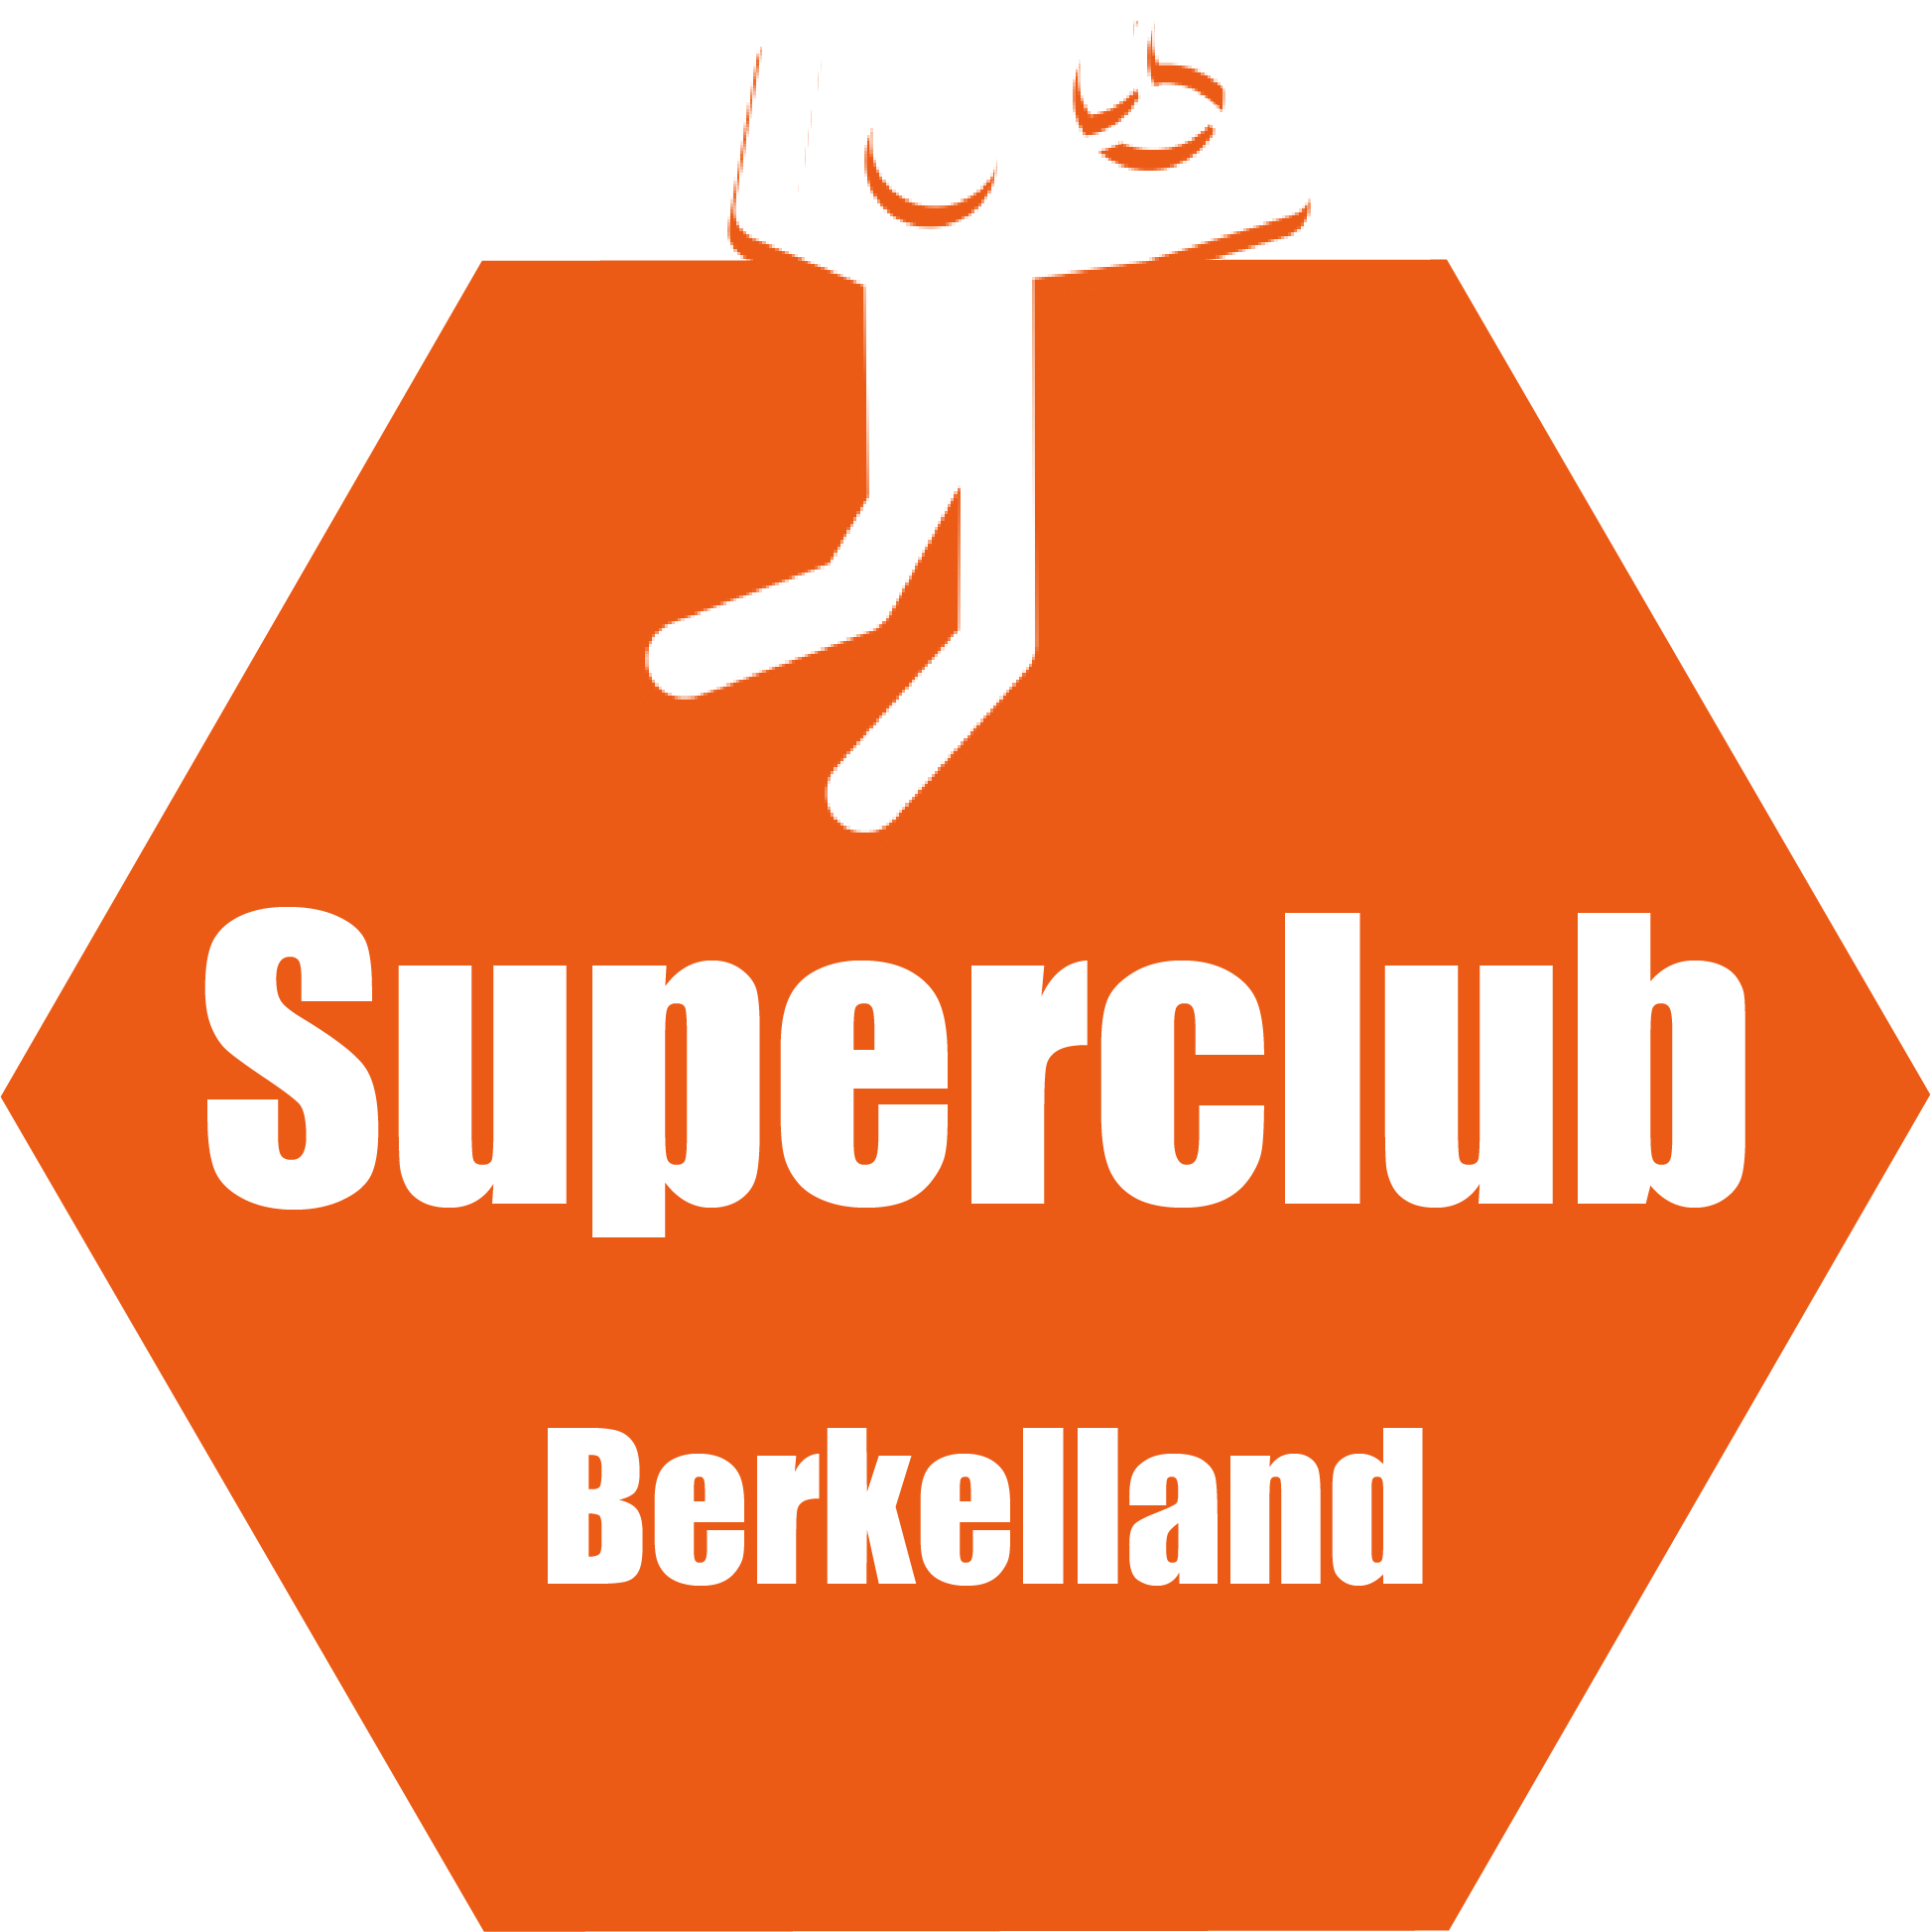 Superclub Berkelland